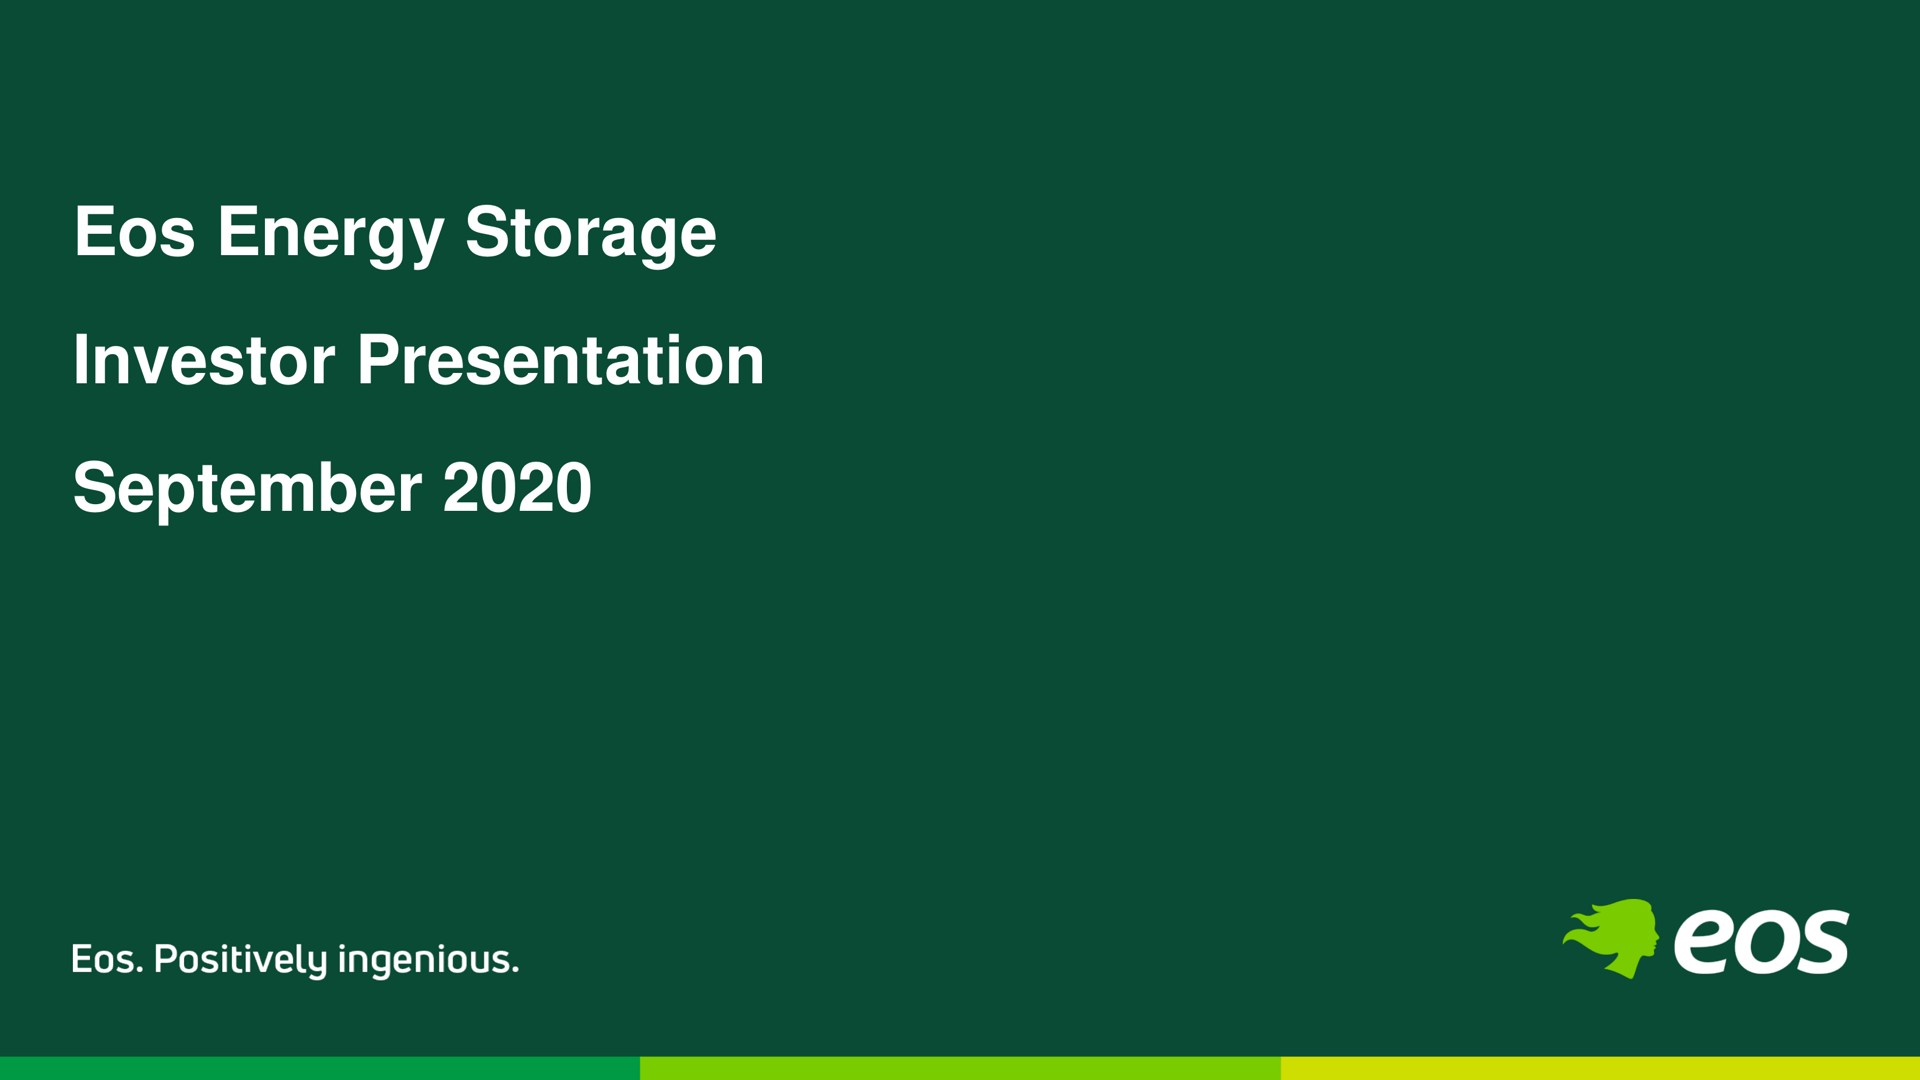 energy storage investor presentation positively ingenious | Eos Energy